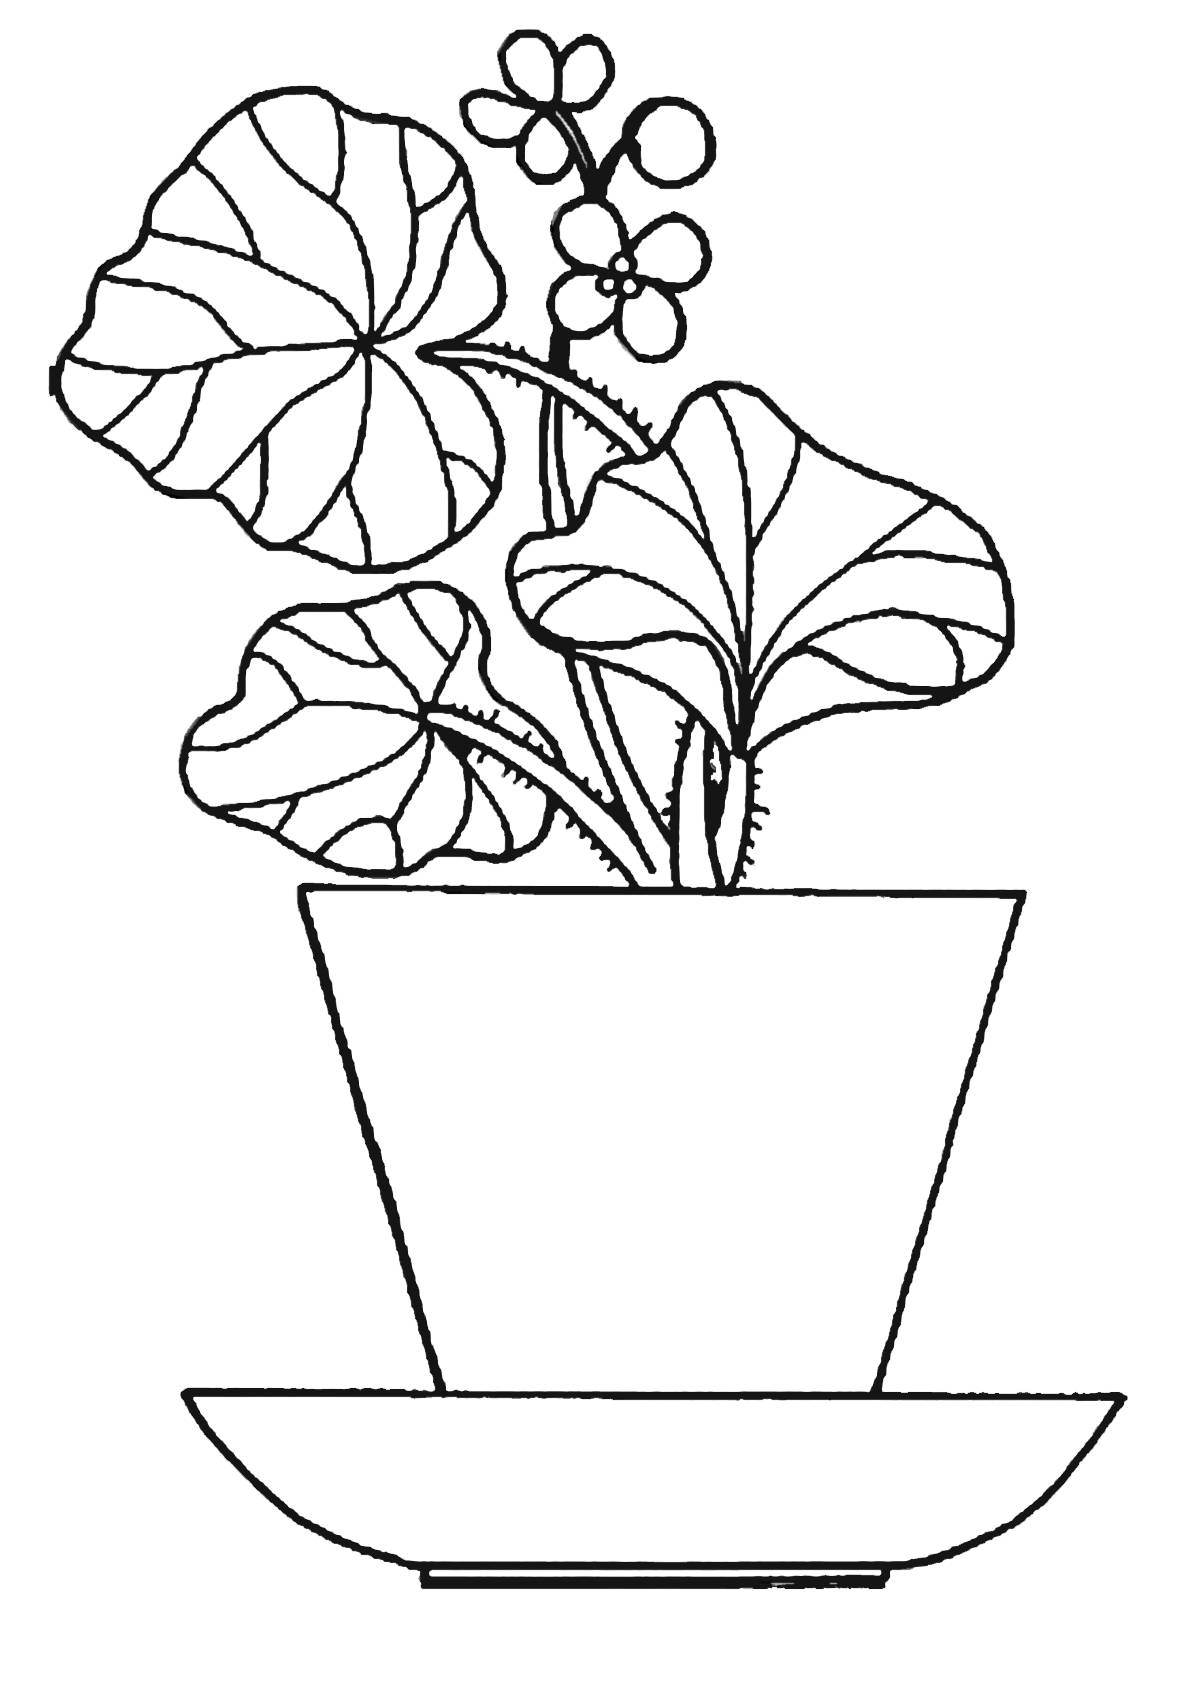 Begonia in a pot